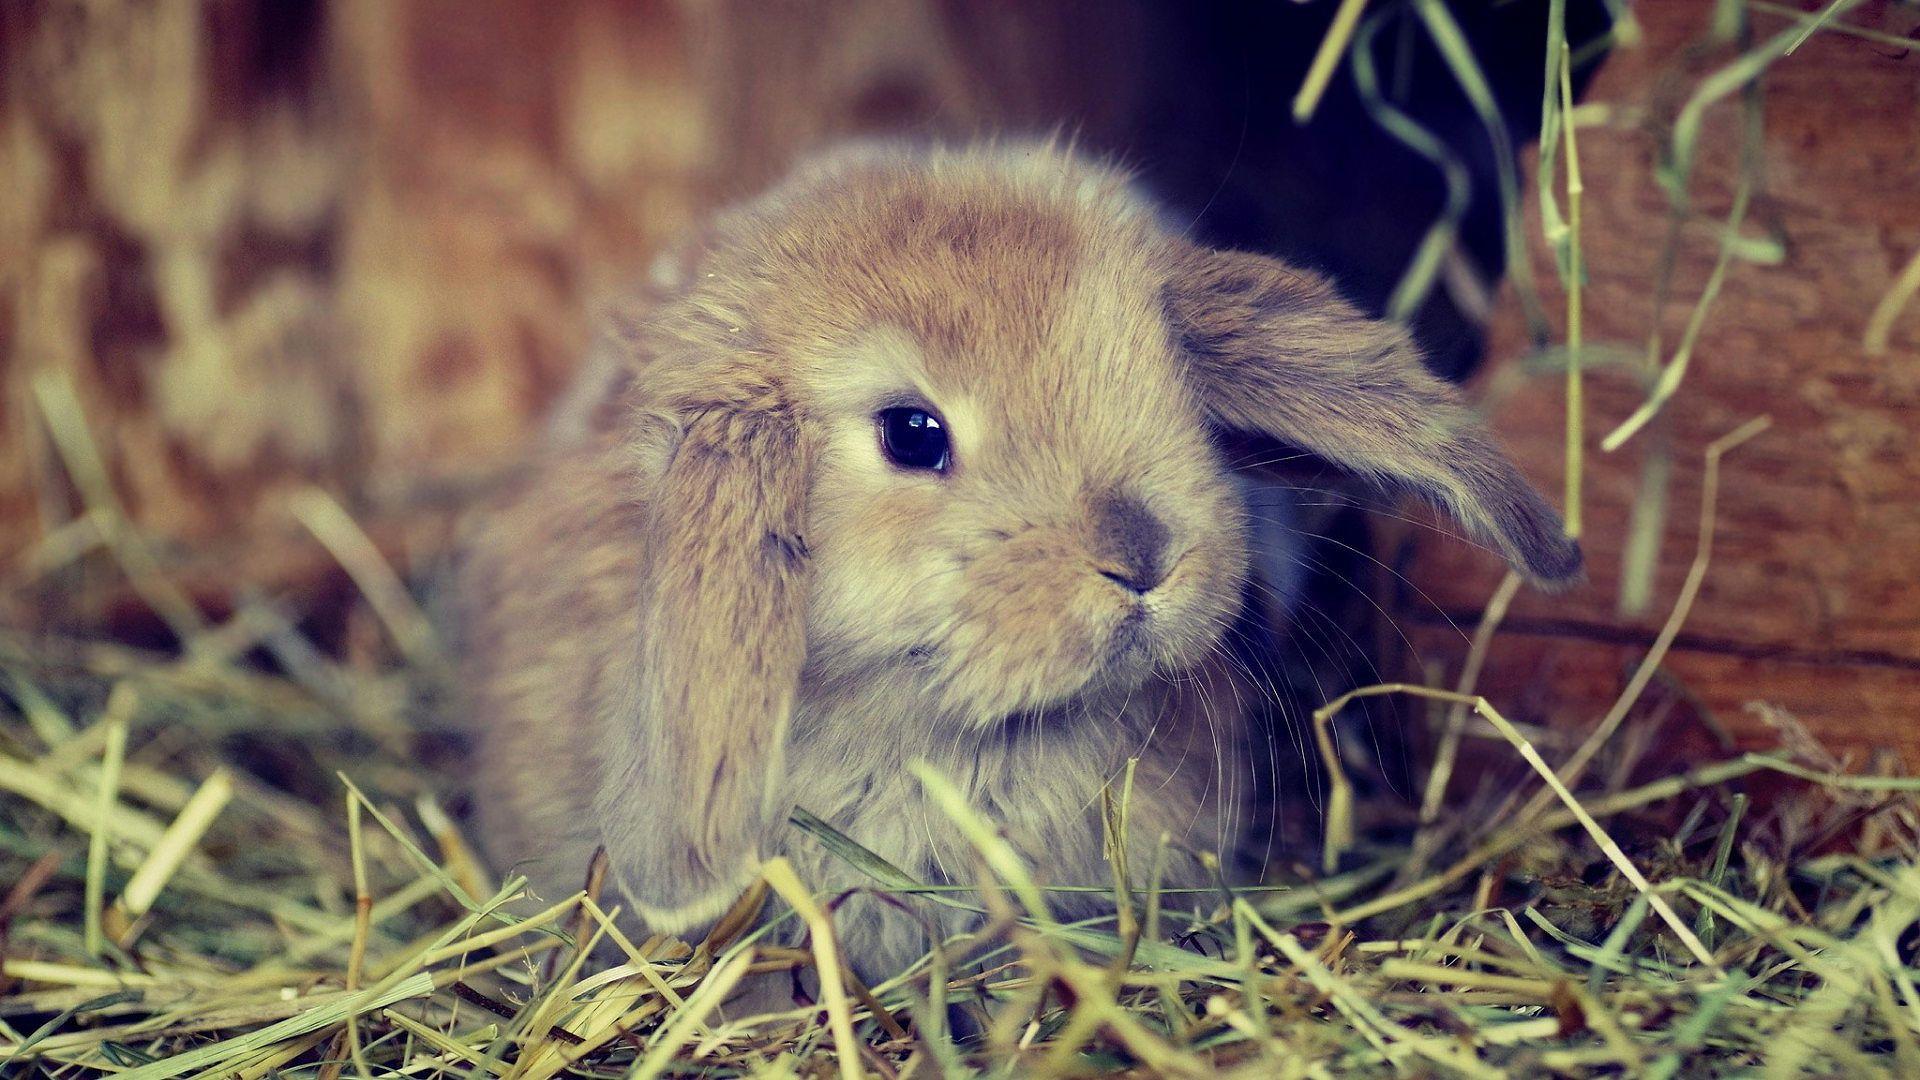 Cute fluffy bunny Wallpaper. Bunny wallpaper, Animals, Cute animals